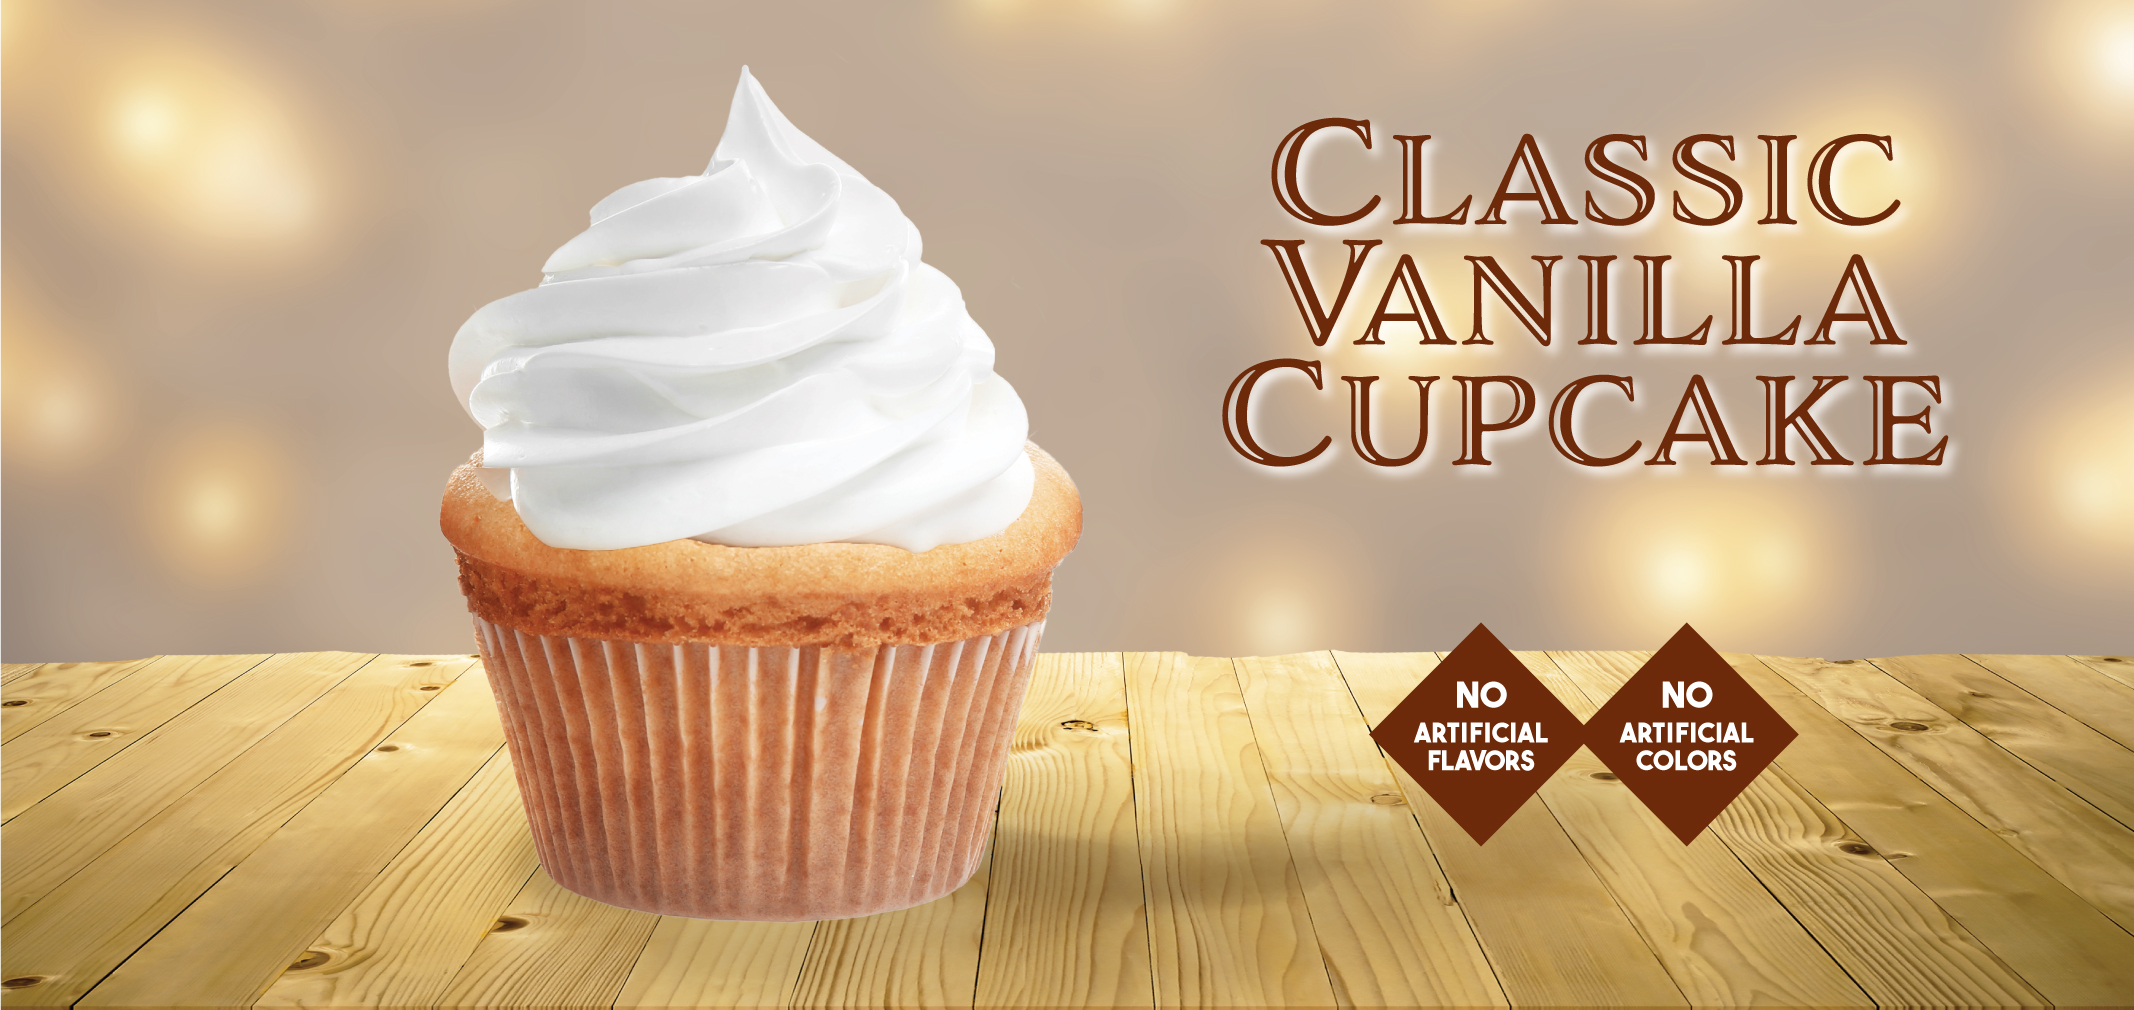 Classic Vanilla Cupcake label image